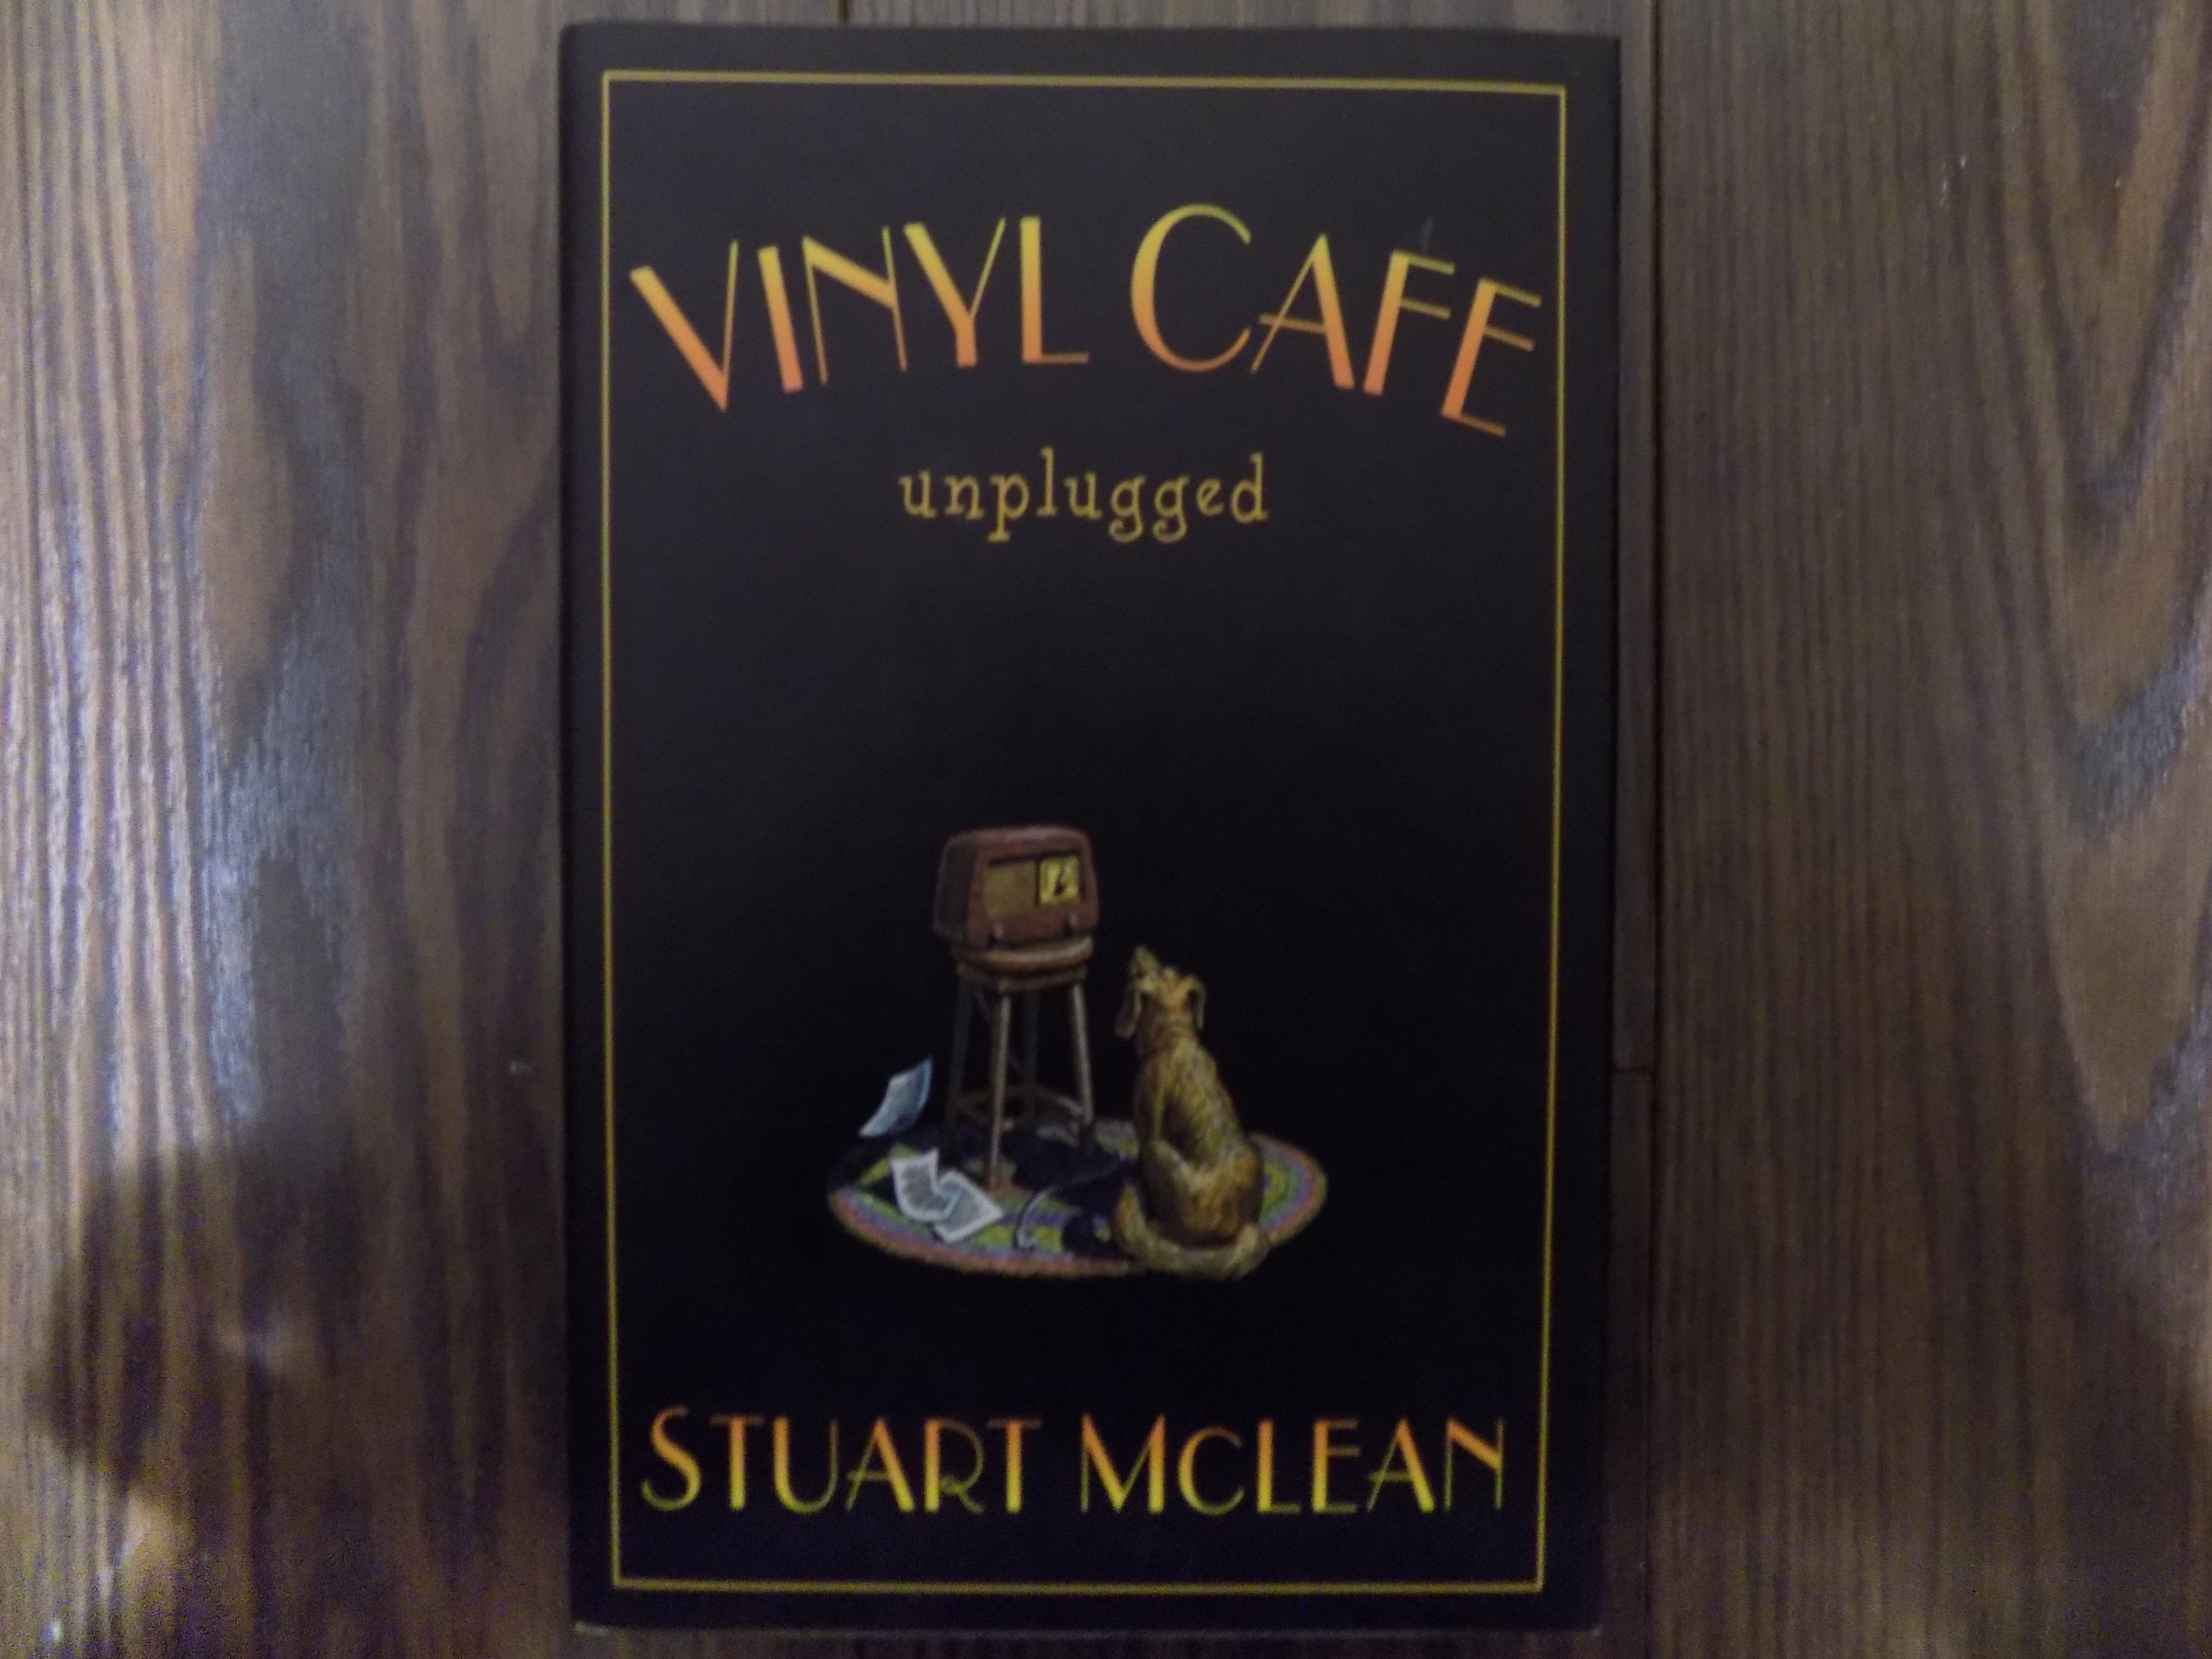 Picton Featured In The Vinyl Cafe Anniversary Album